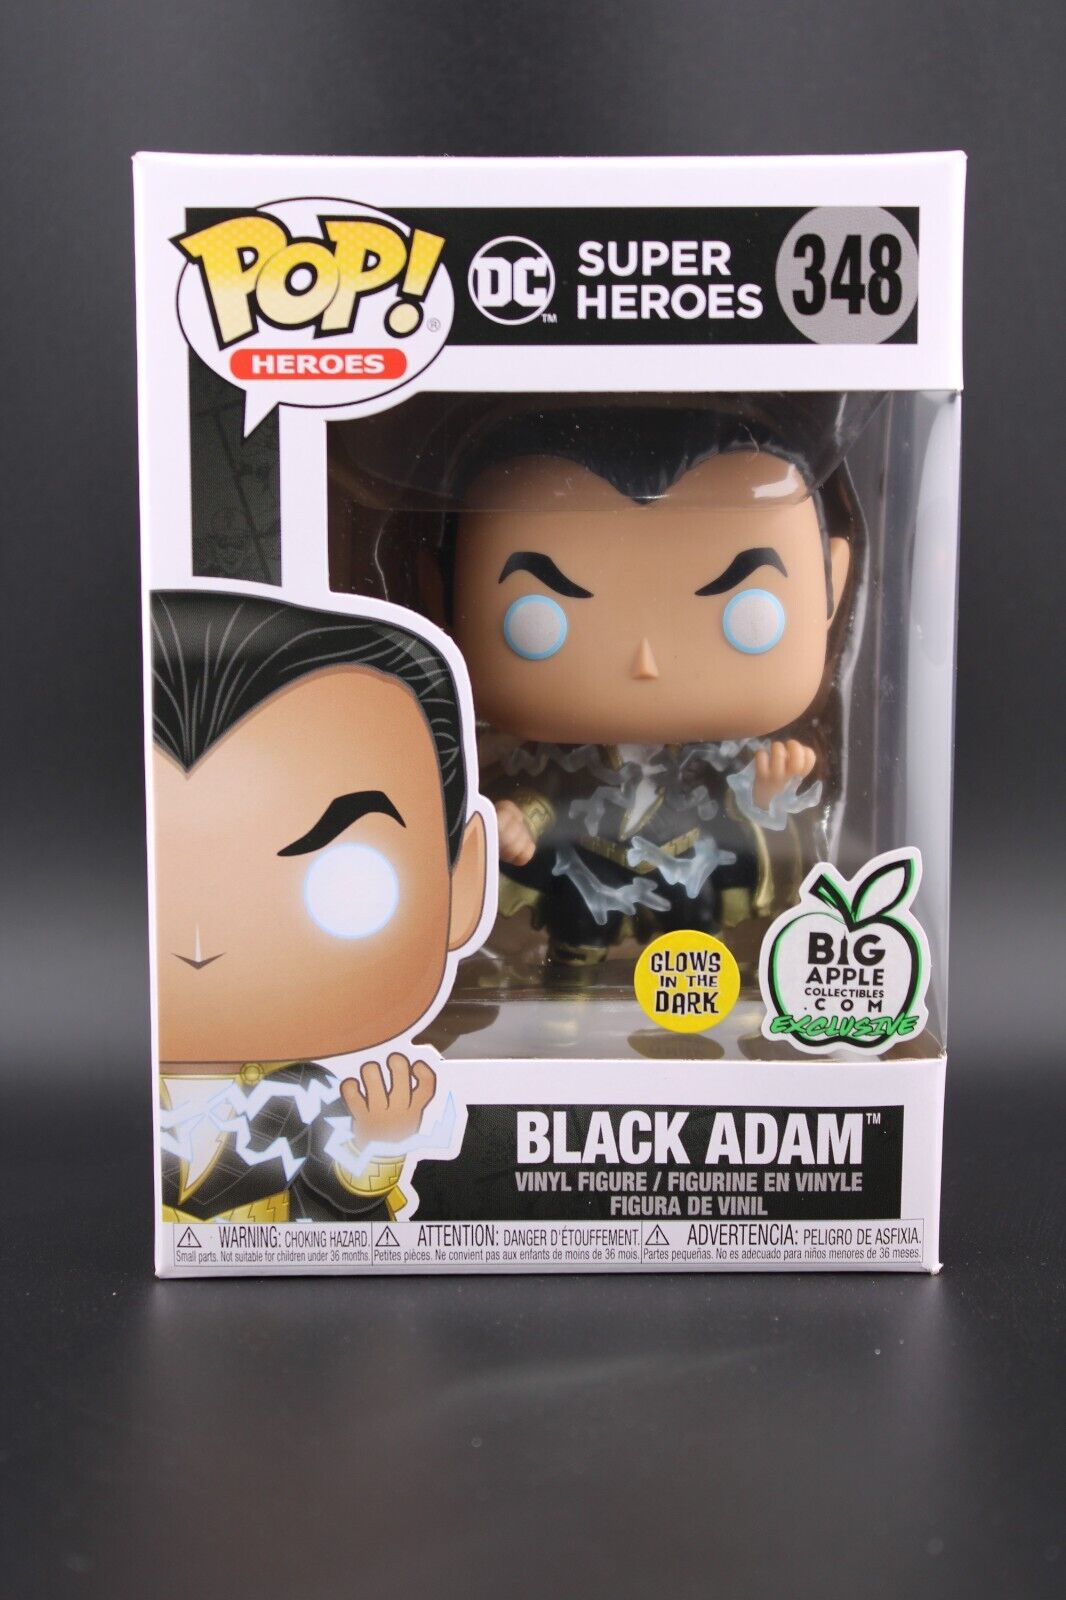 BLACK ADAM GLOW ITD - DC SUPER HEROES #348 BIGAPPLECOLLECTIBLES.COM EXCLUSIVE